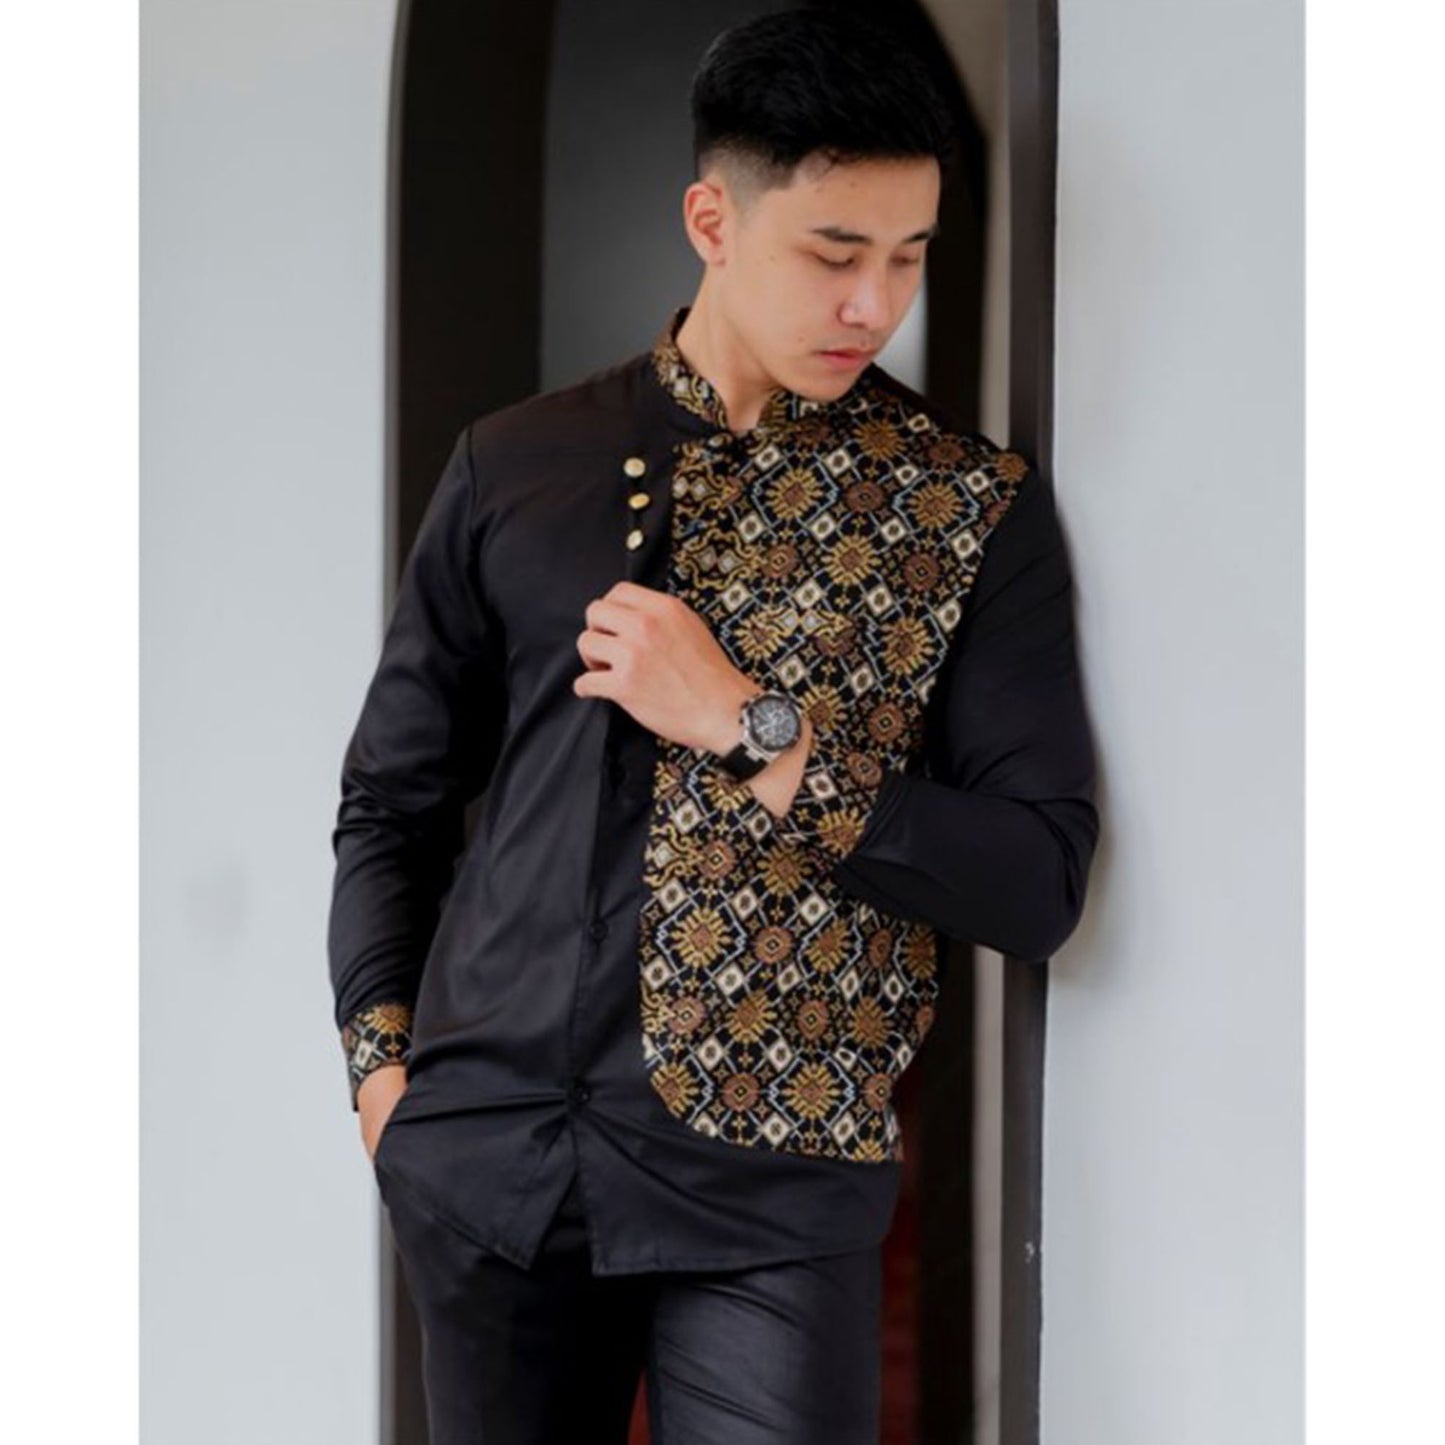 Pangeran Black Batik Shirt Classic Black with Traditional Patterns